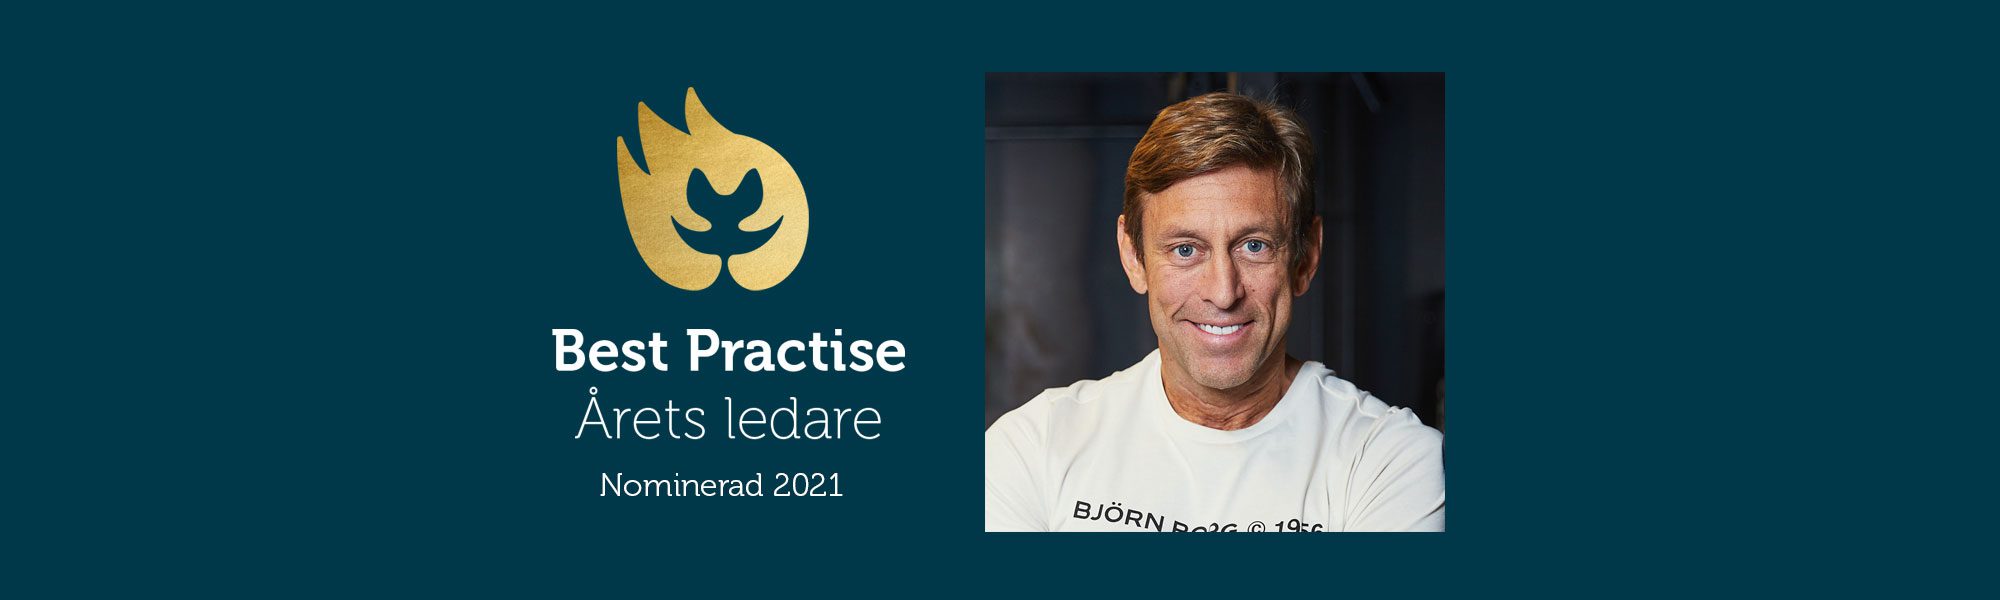 Henrik Bunge nominerad till priset Best Practise Årets ledare 2021